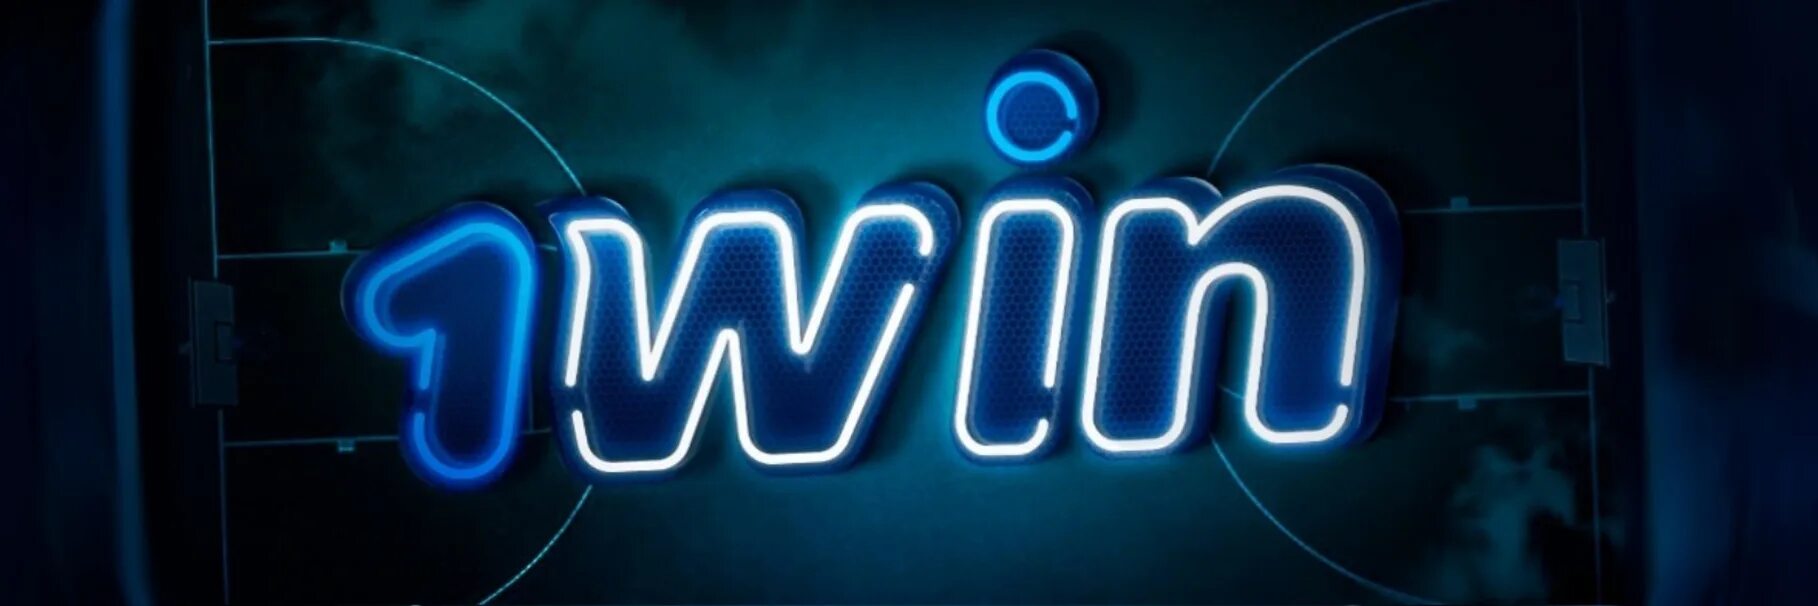 1win казино. 1win баннер. 1win логотип. 1win аватарка. 1win 1 win license bk org ru